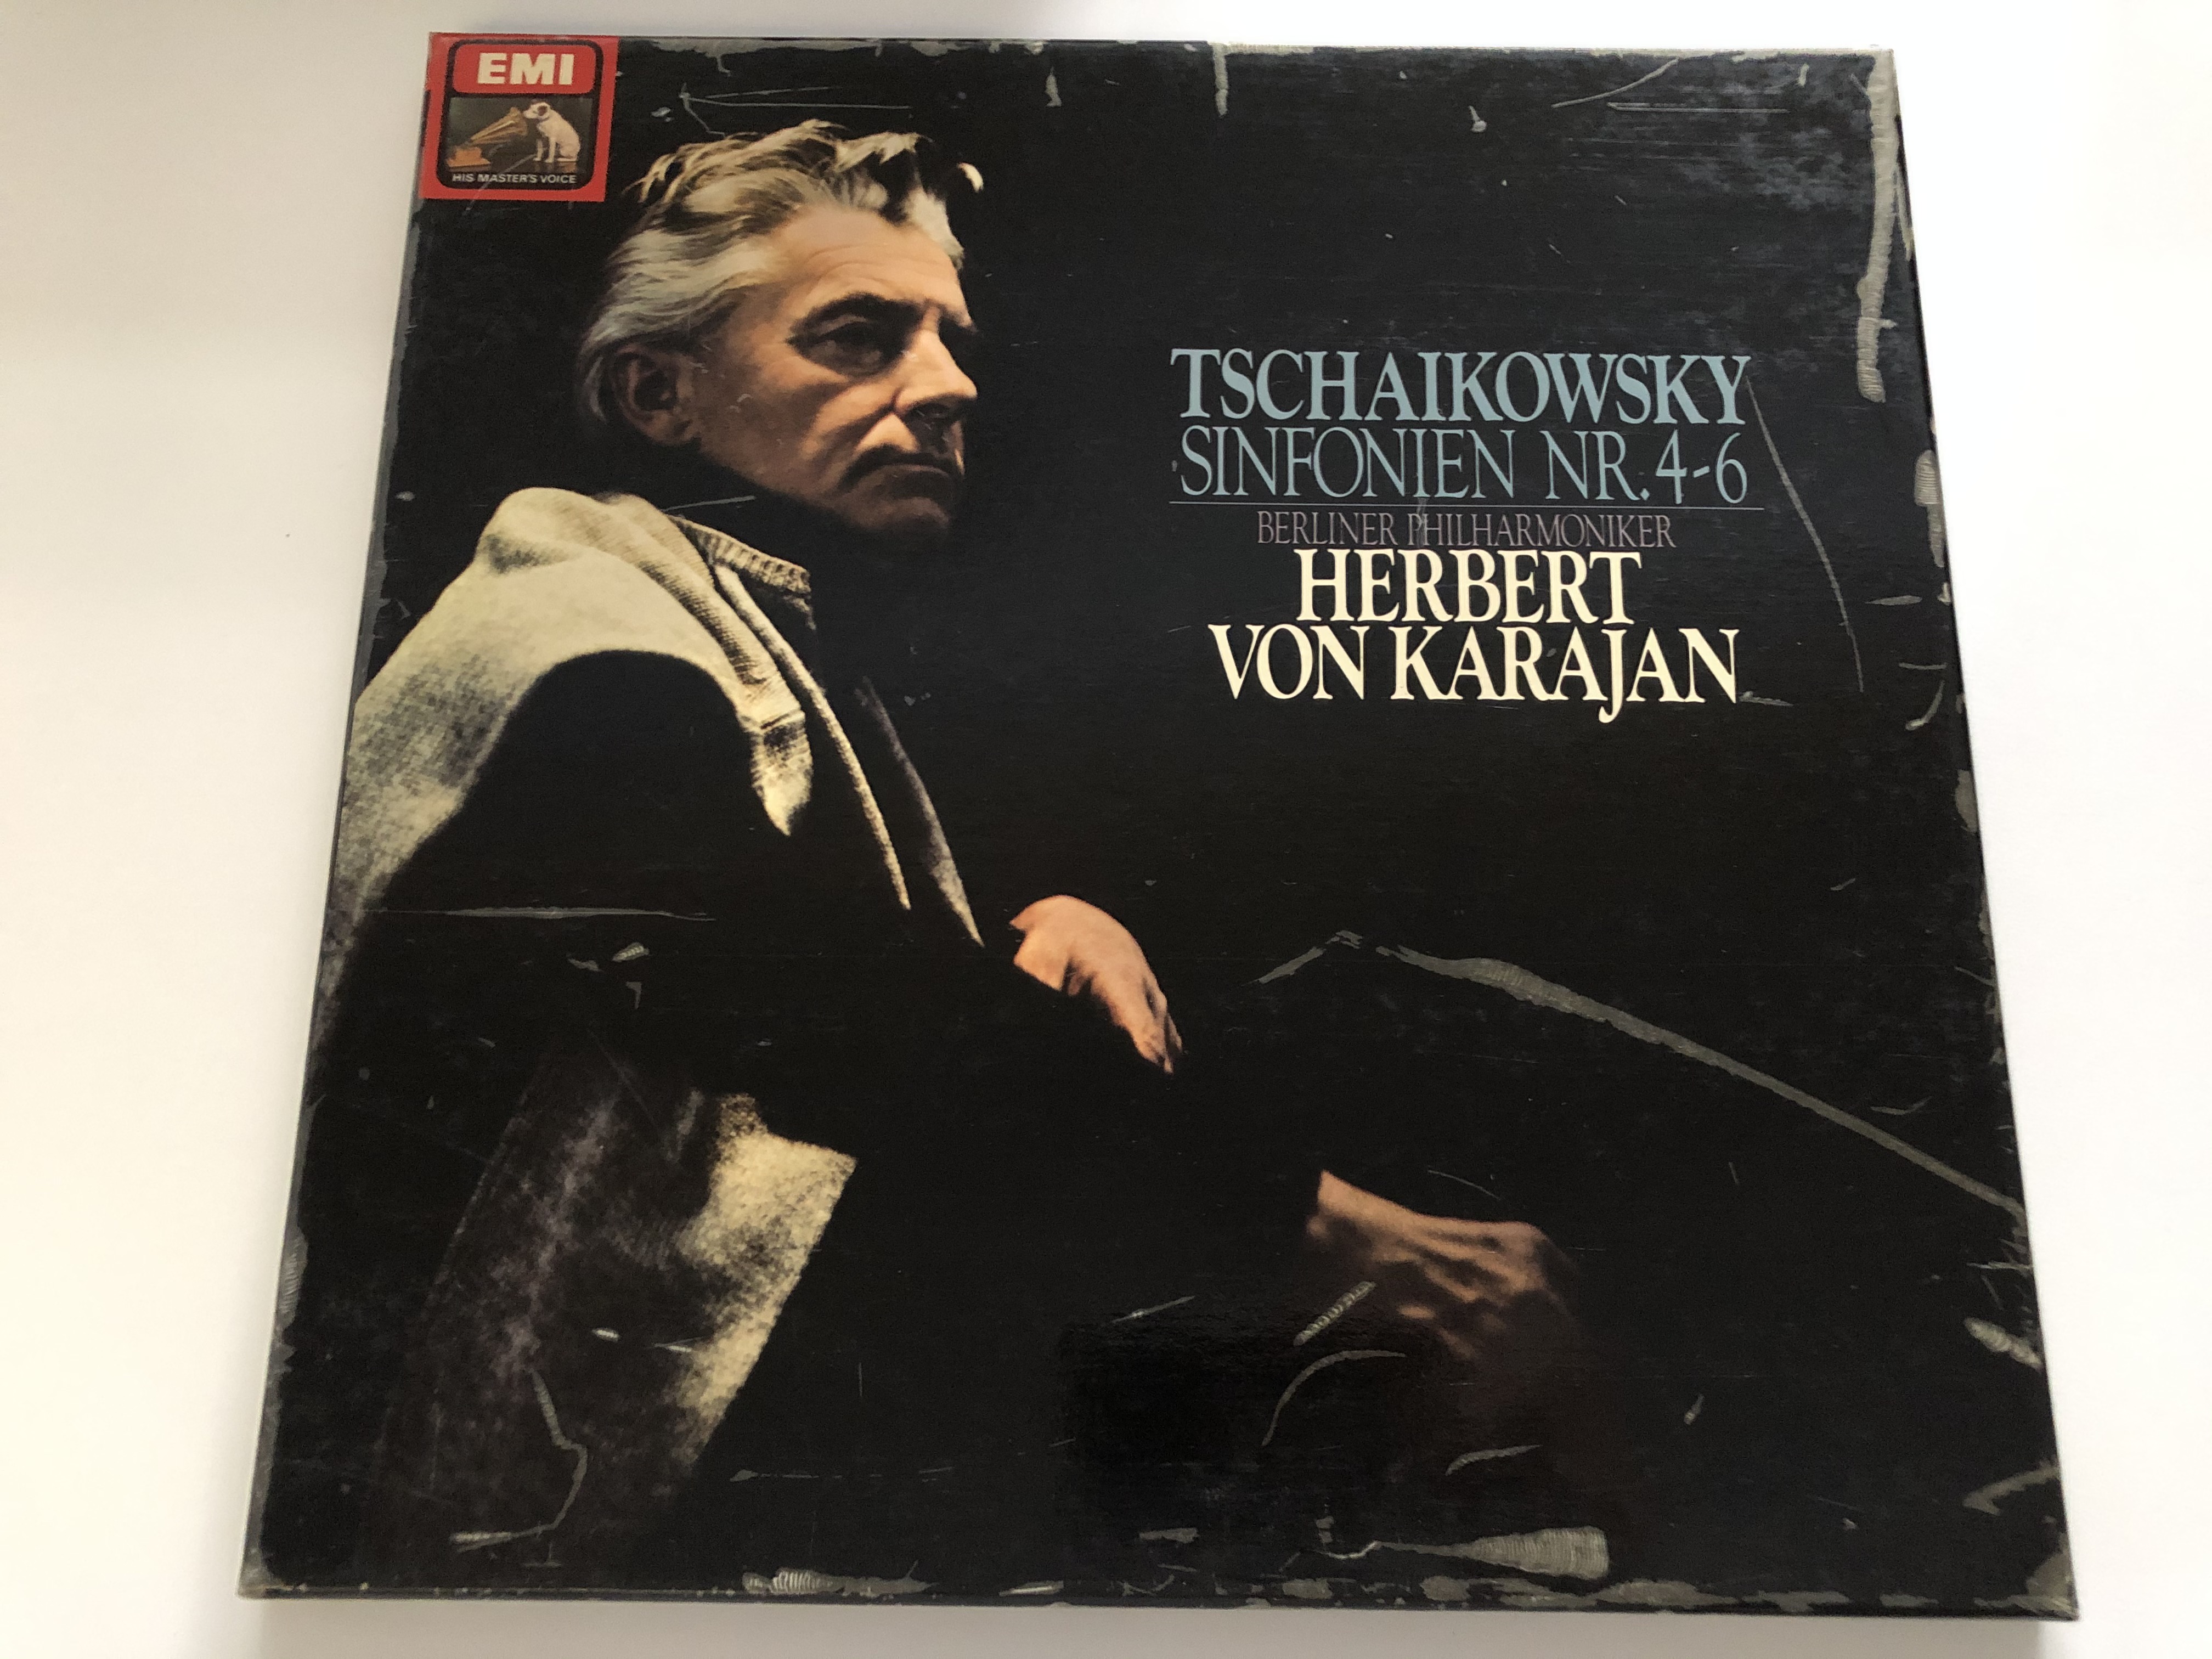 tschaikowsky-sinfonien-nr.4-6-berliner-philharmoniker-herbert-von-karajan-emi-records-3x-lp-1c-197-02-30507-q-1-.jpg